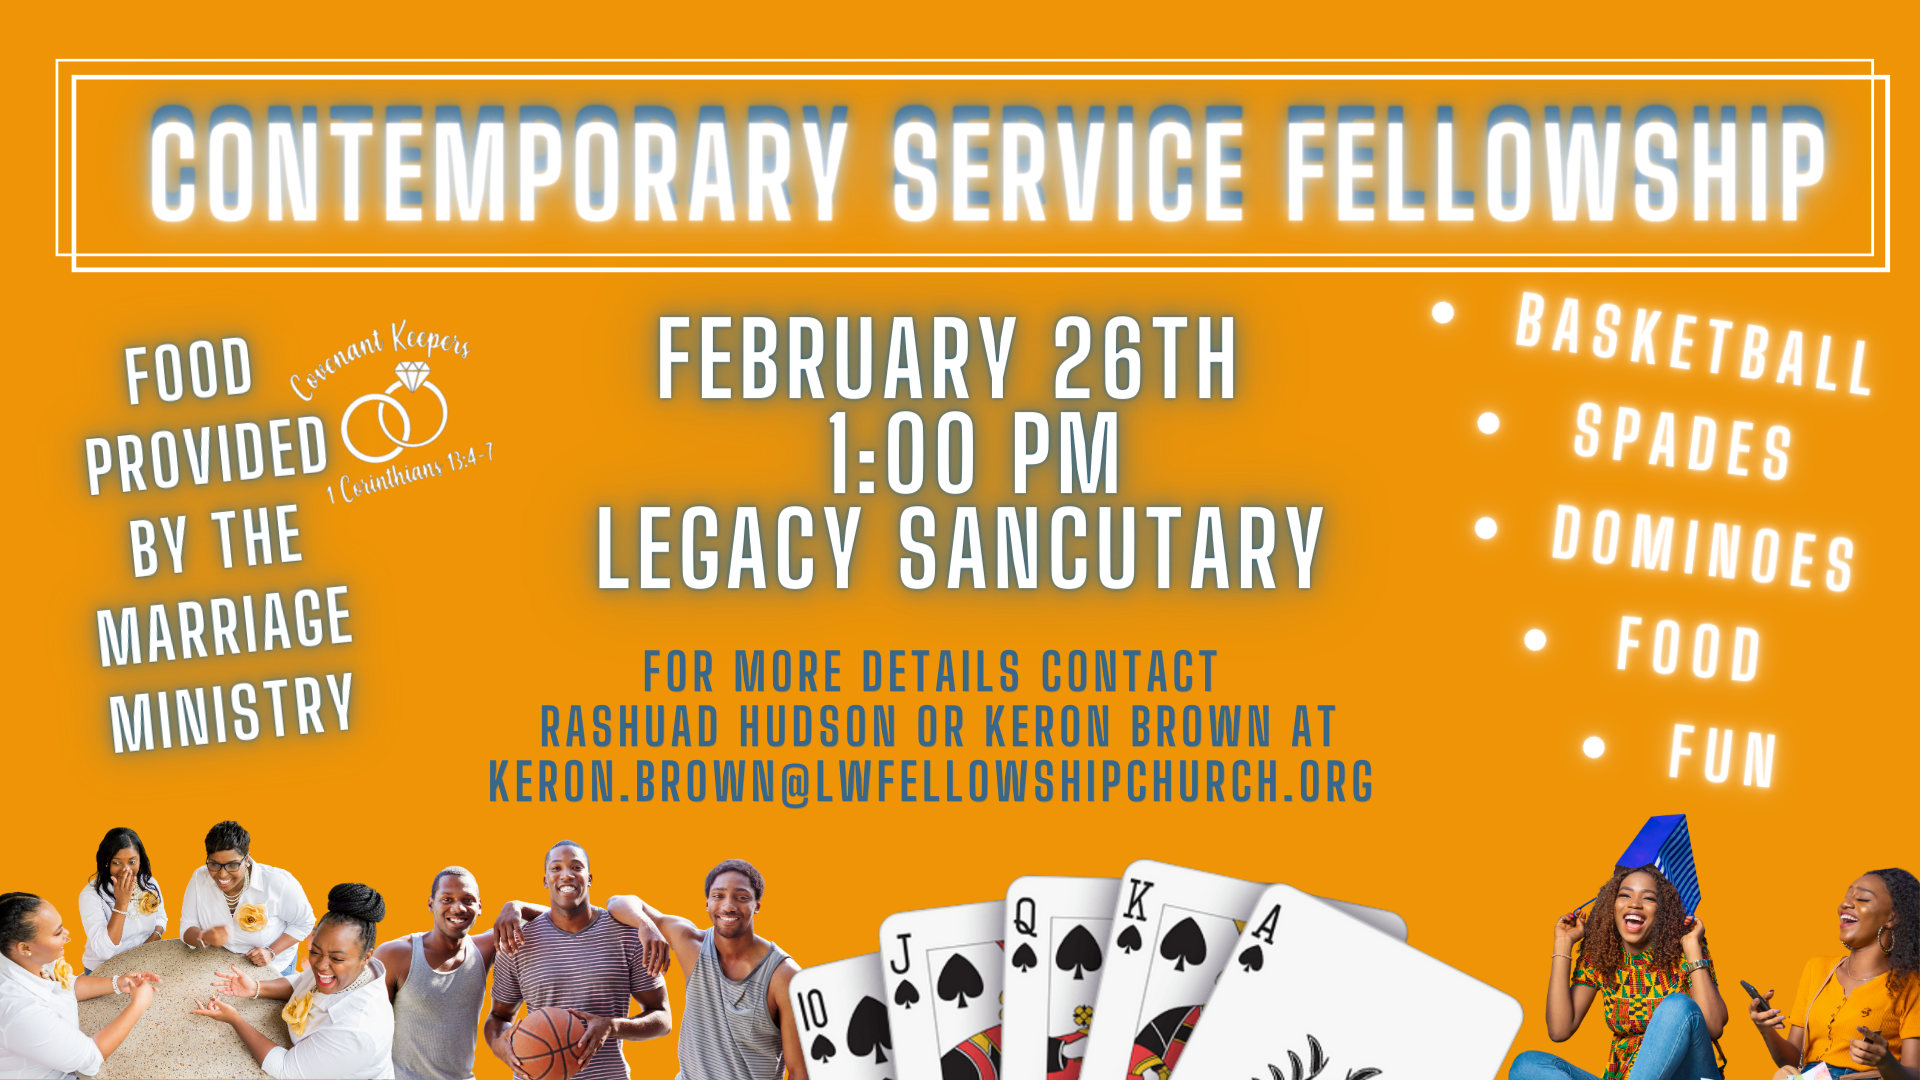 Contemporary Service Fellowship Feb. 26th head image